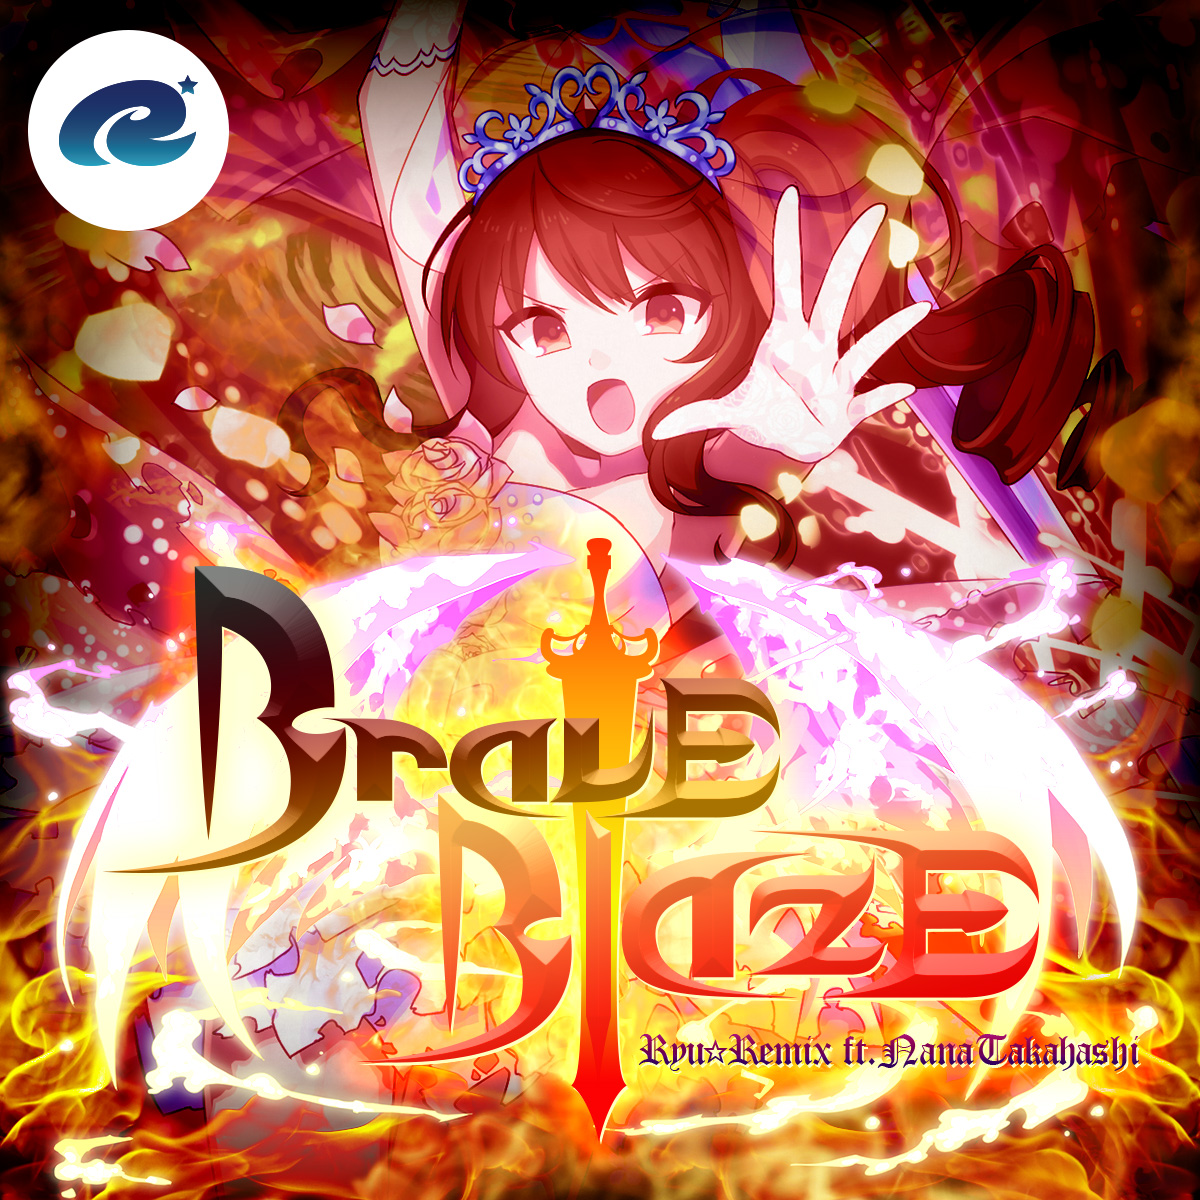 brave blaze(Ryu☆Remix ft.NanaTakahashi)